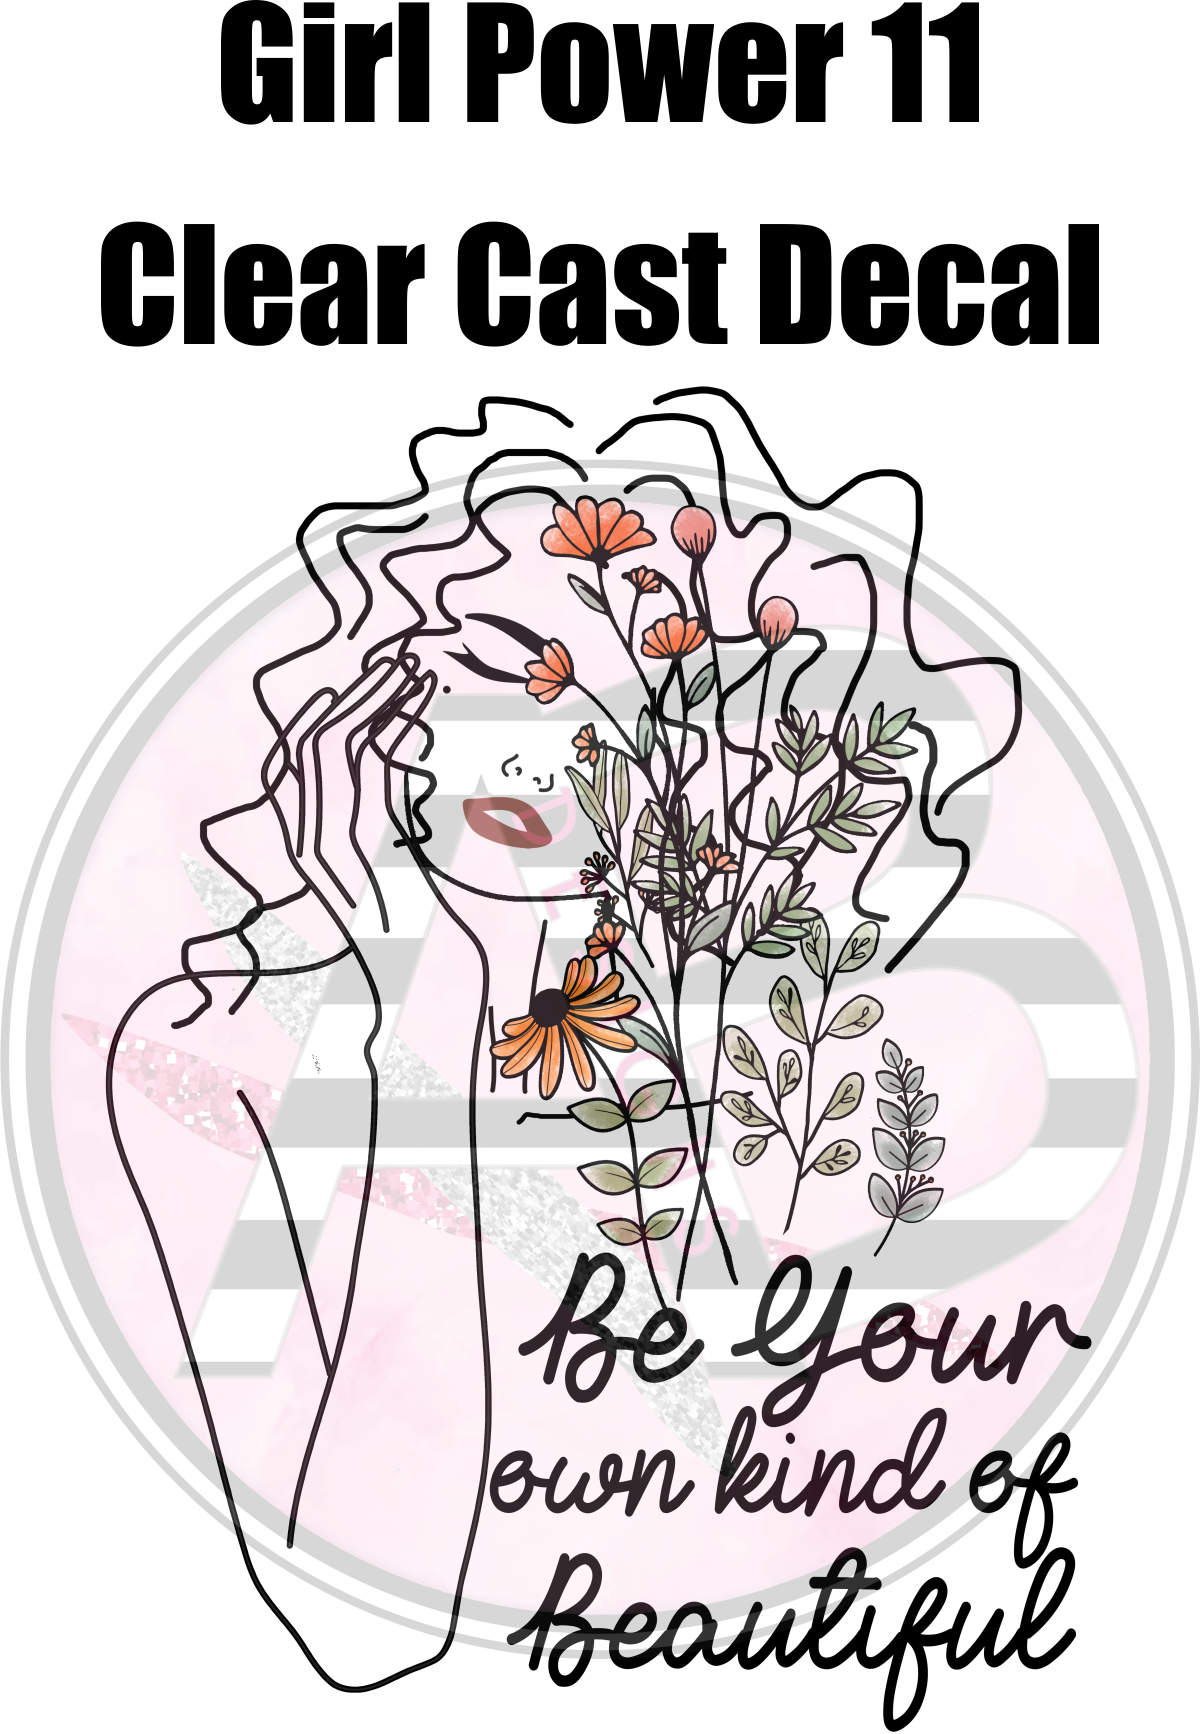 Girl Power 11 - Clear Cast Decal